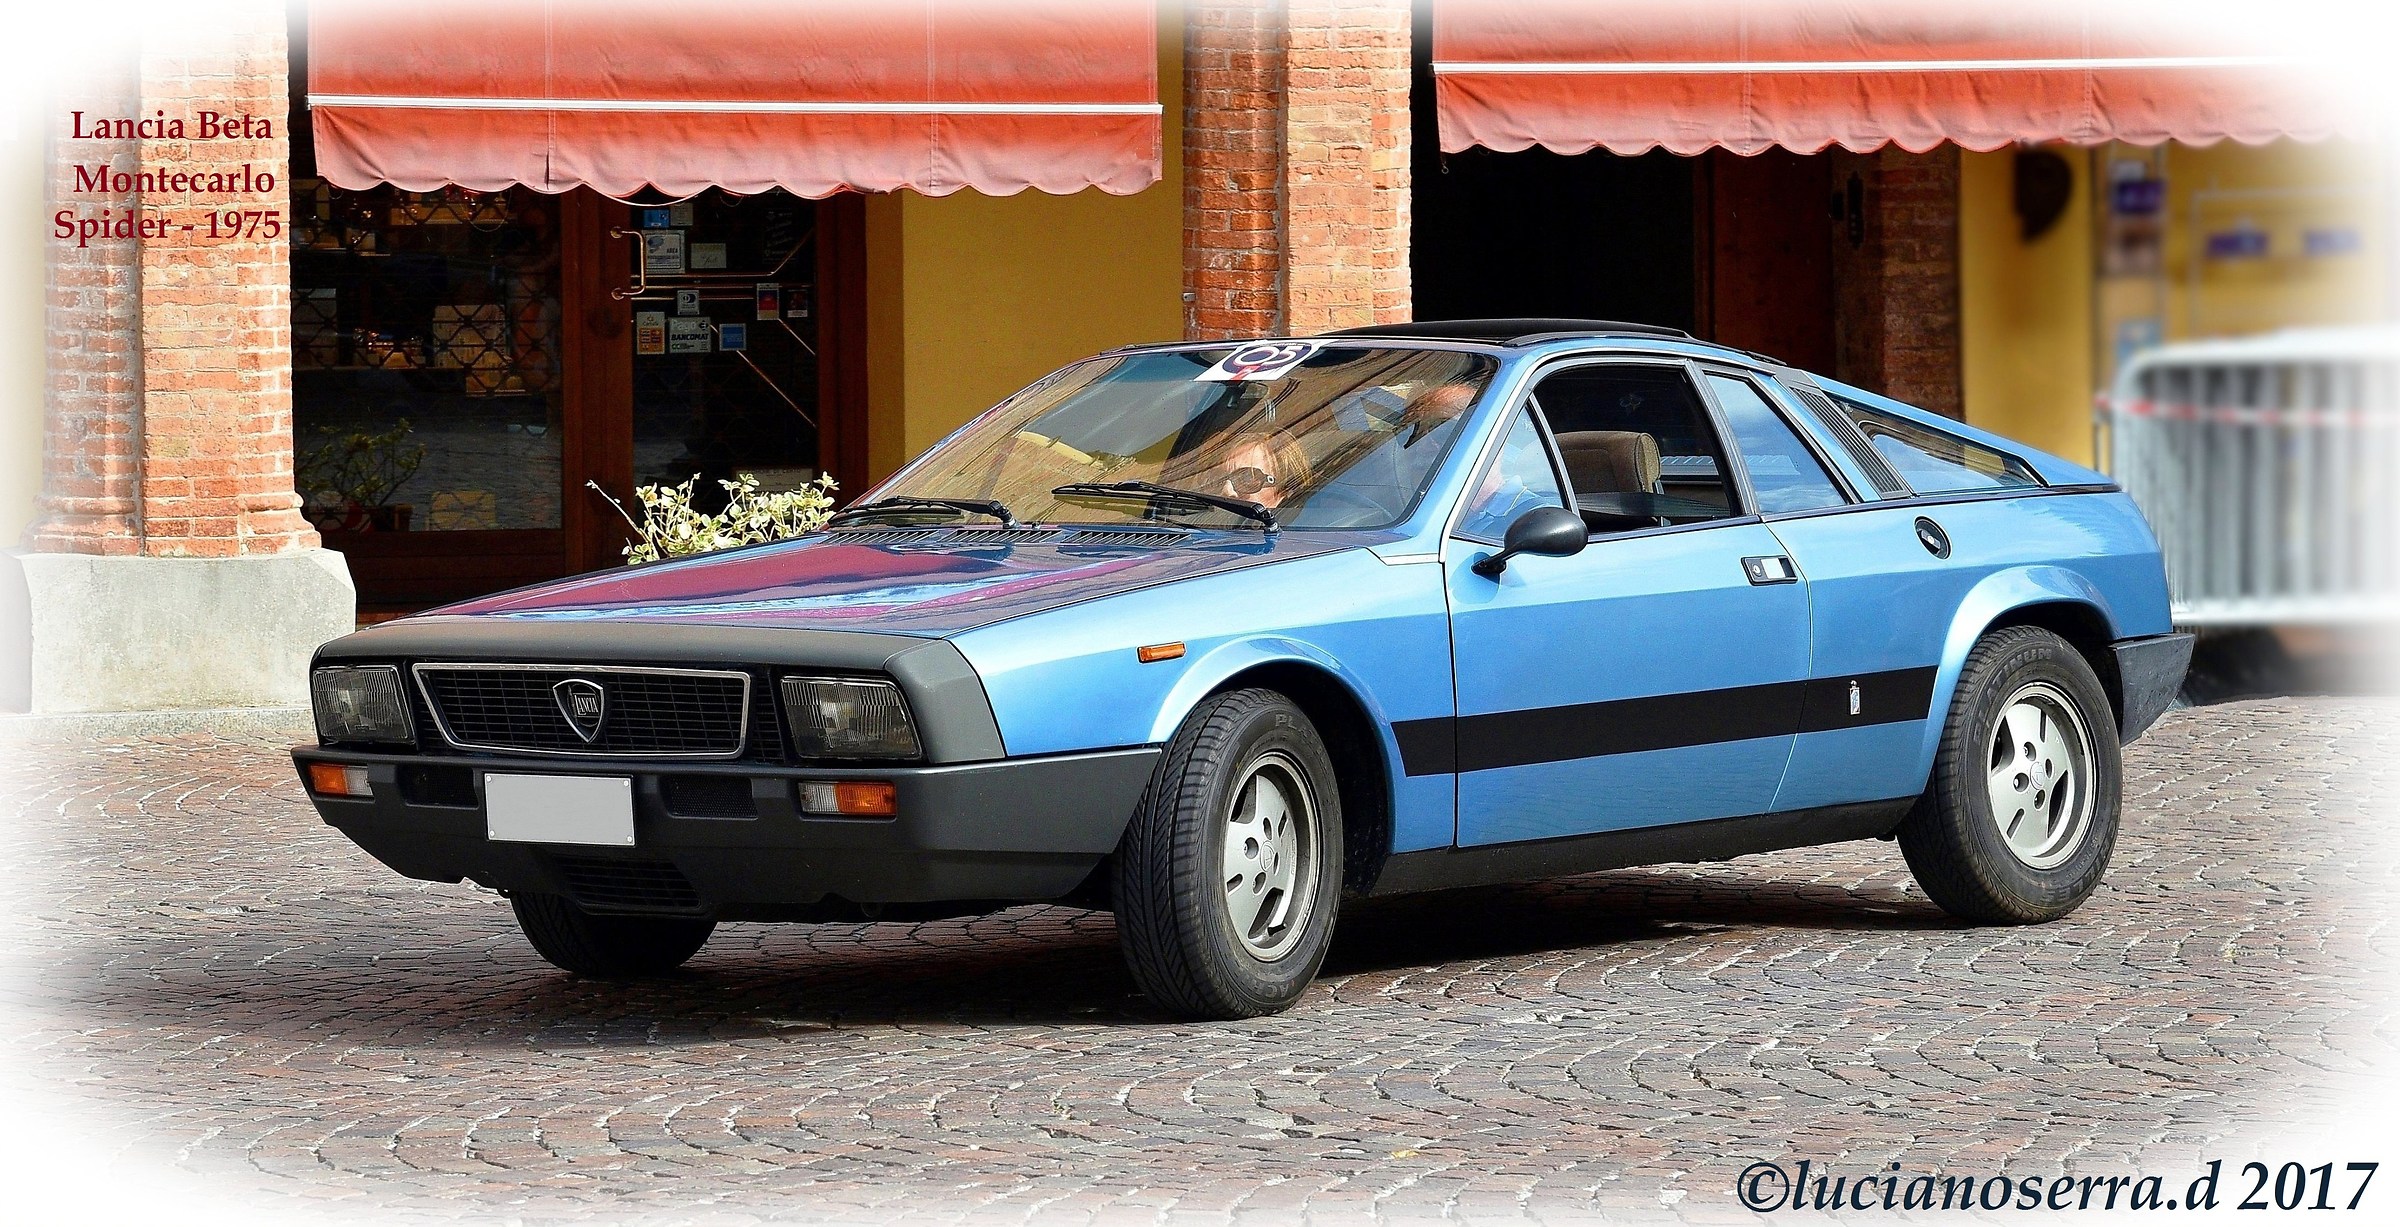 Lancia Beta Montecarlo Spider 1° serie - 1975...